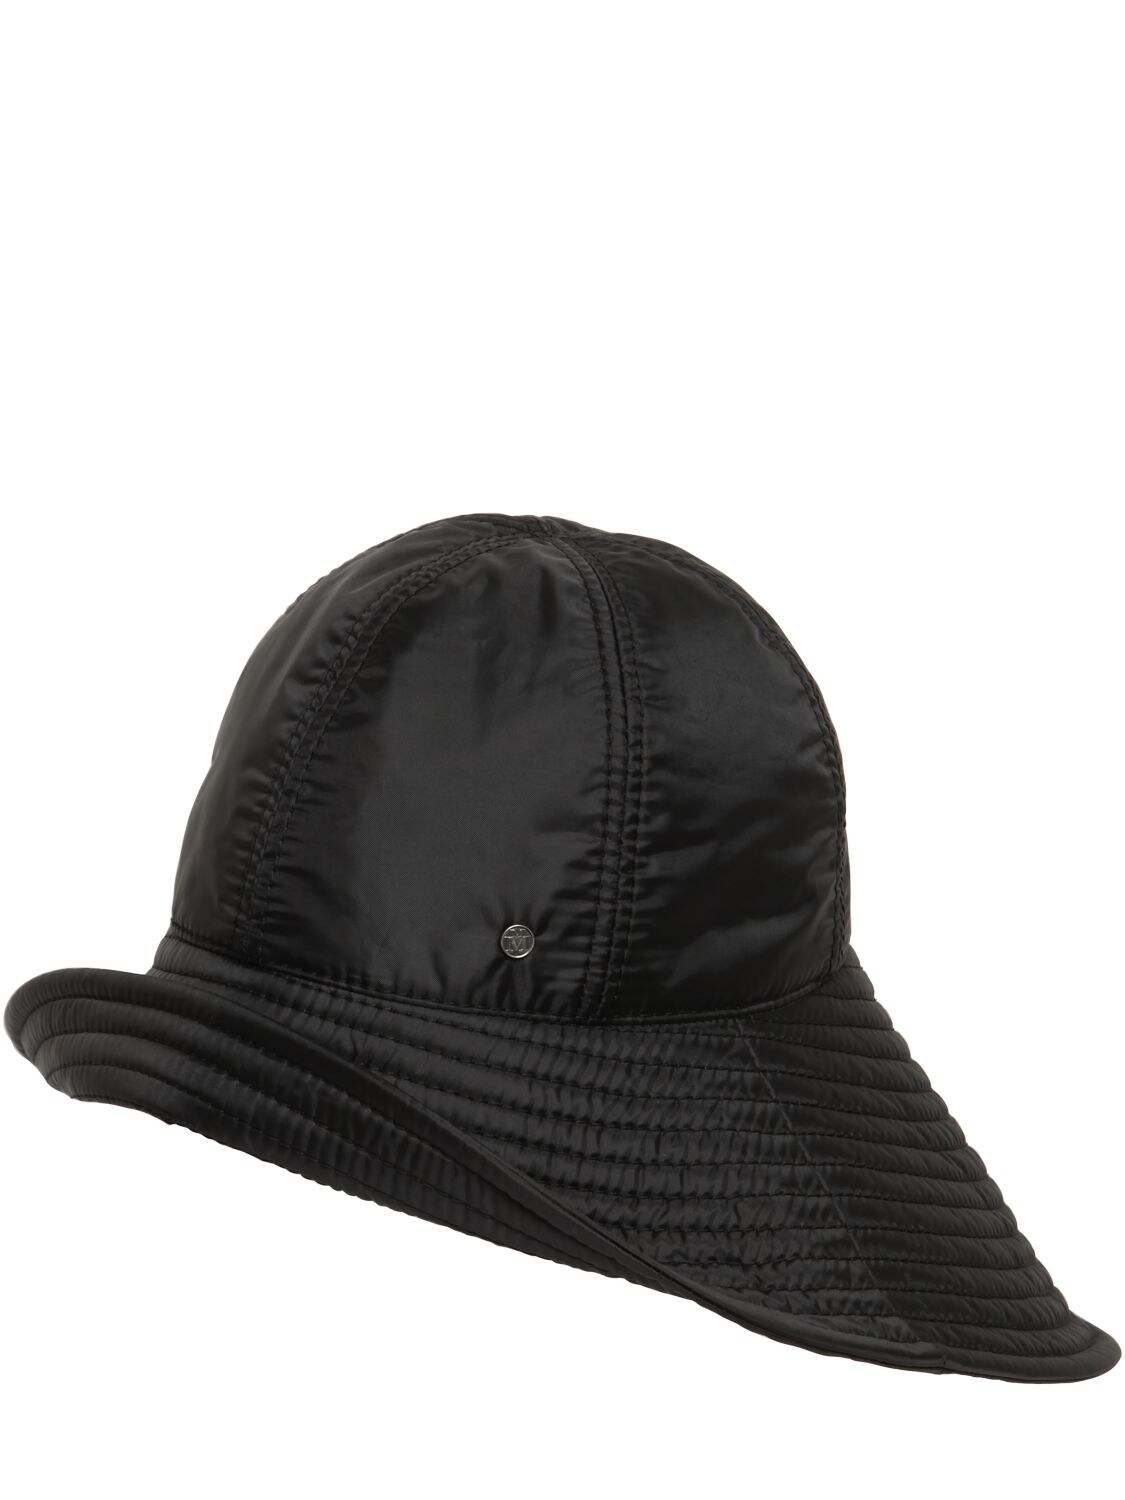 Maison Michel Julienne Bomber Nylon Hat In Black